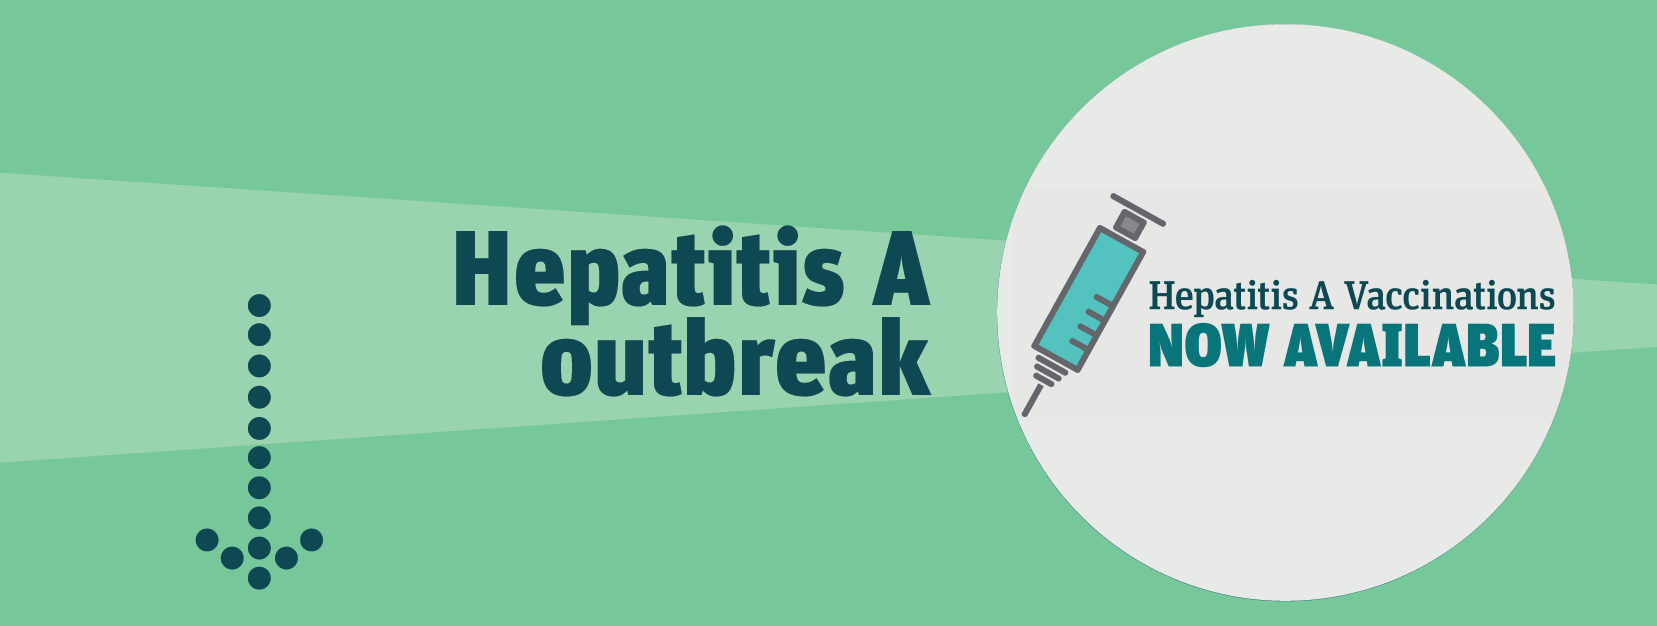 Hepatitis A outbreak